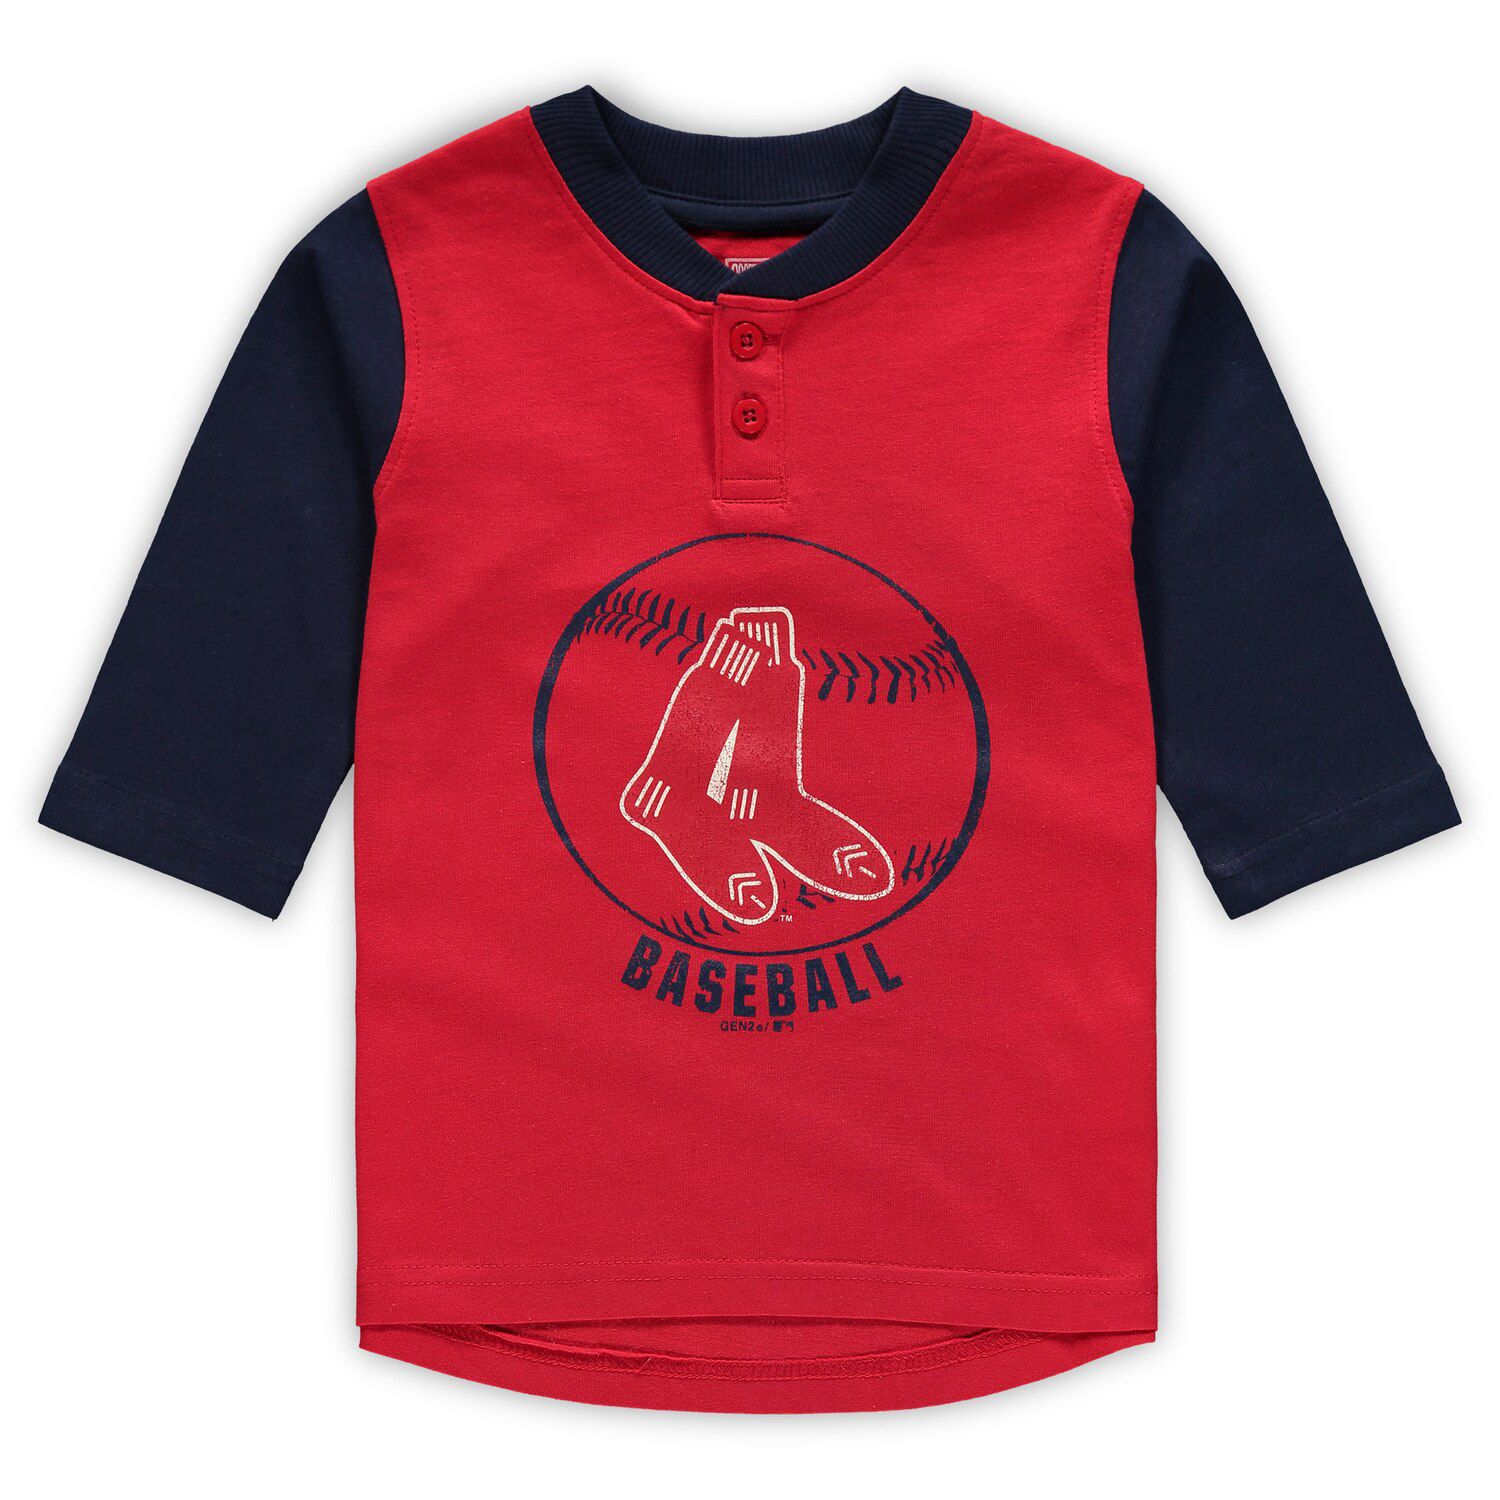 boston red sox toddler shirt